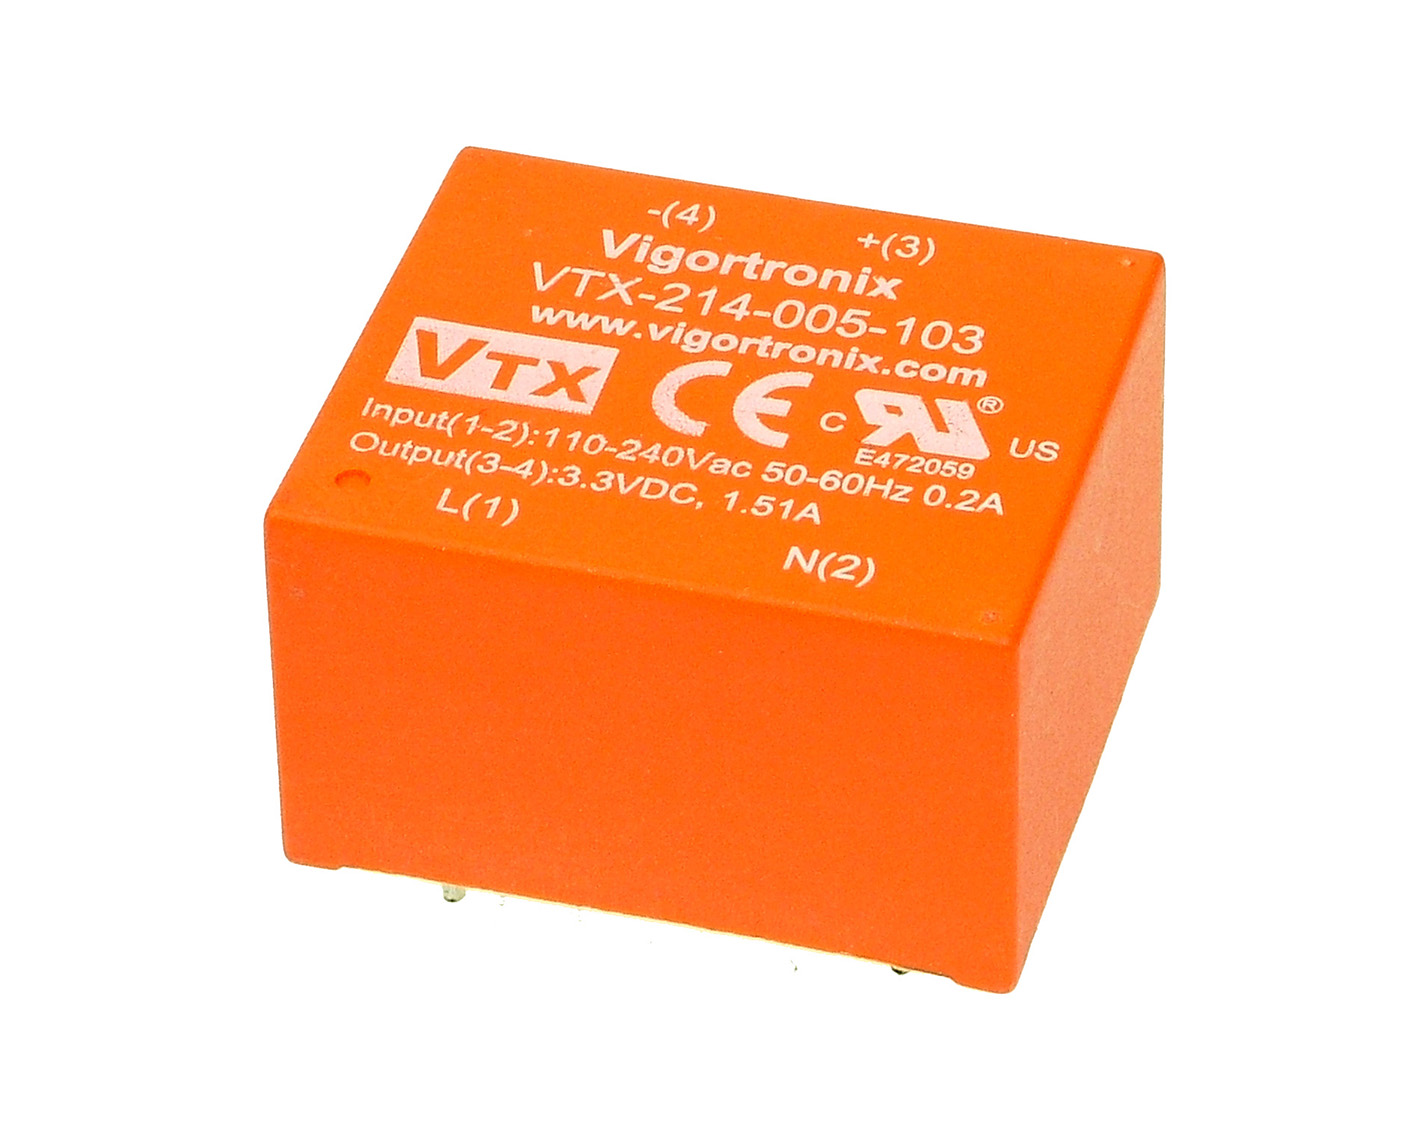 Vigortronix VTX-214-005-1 AC-DC Converter 5 Watt